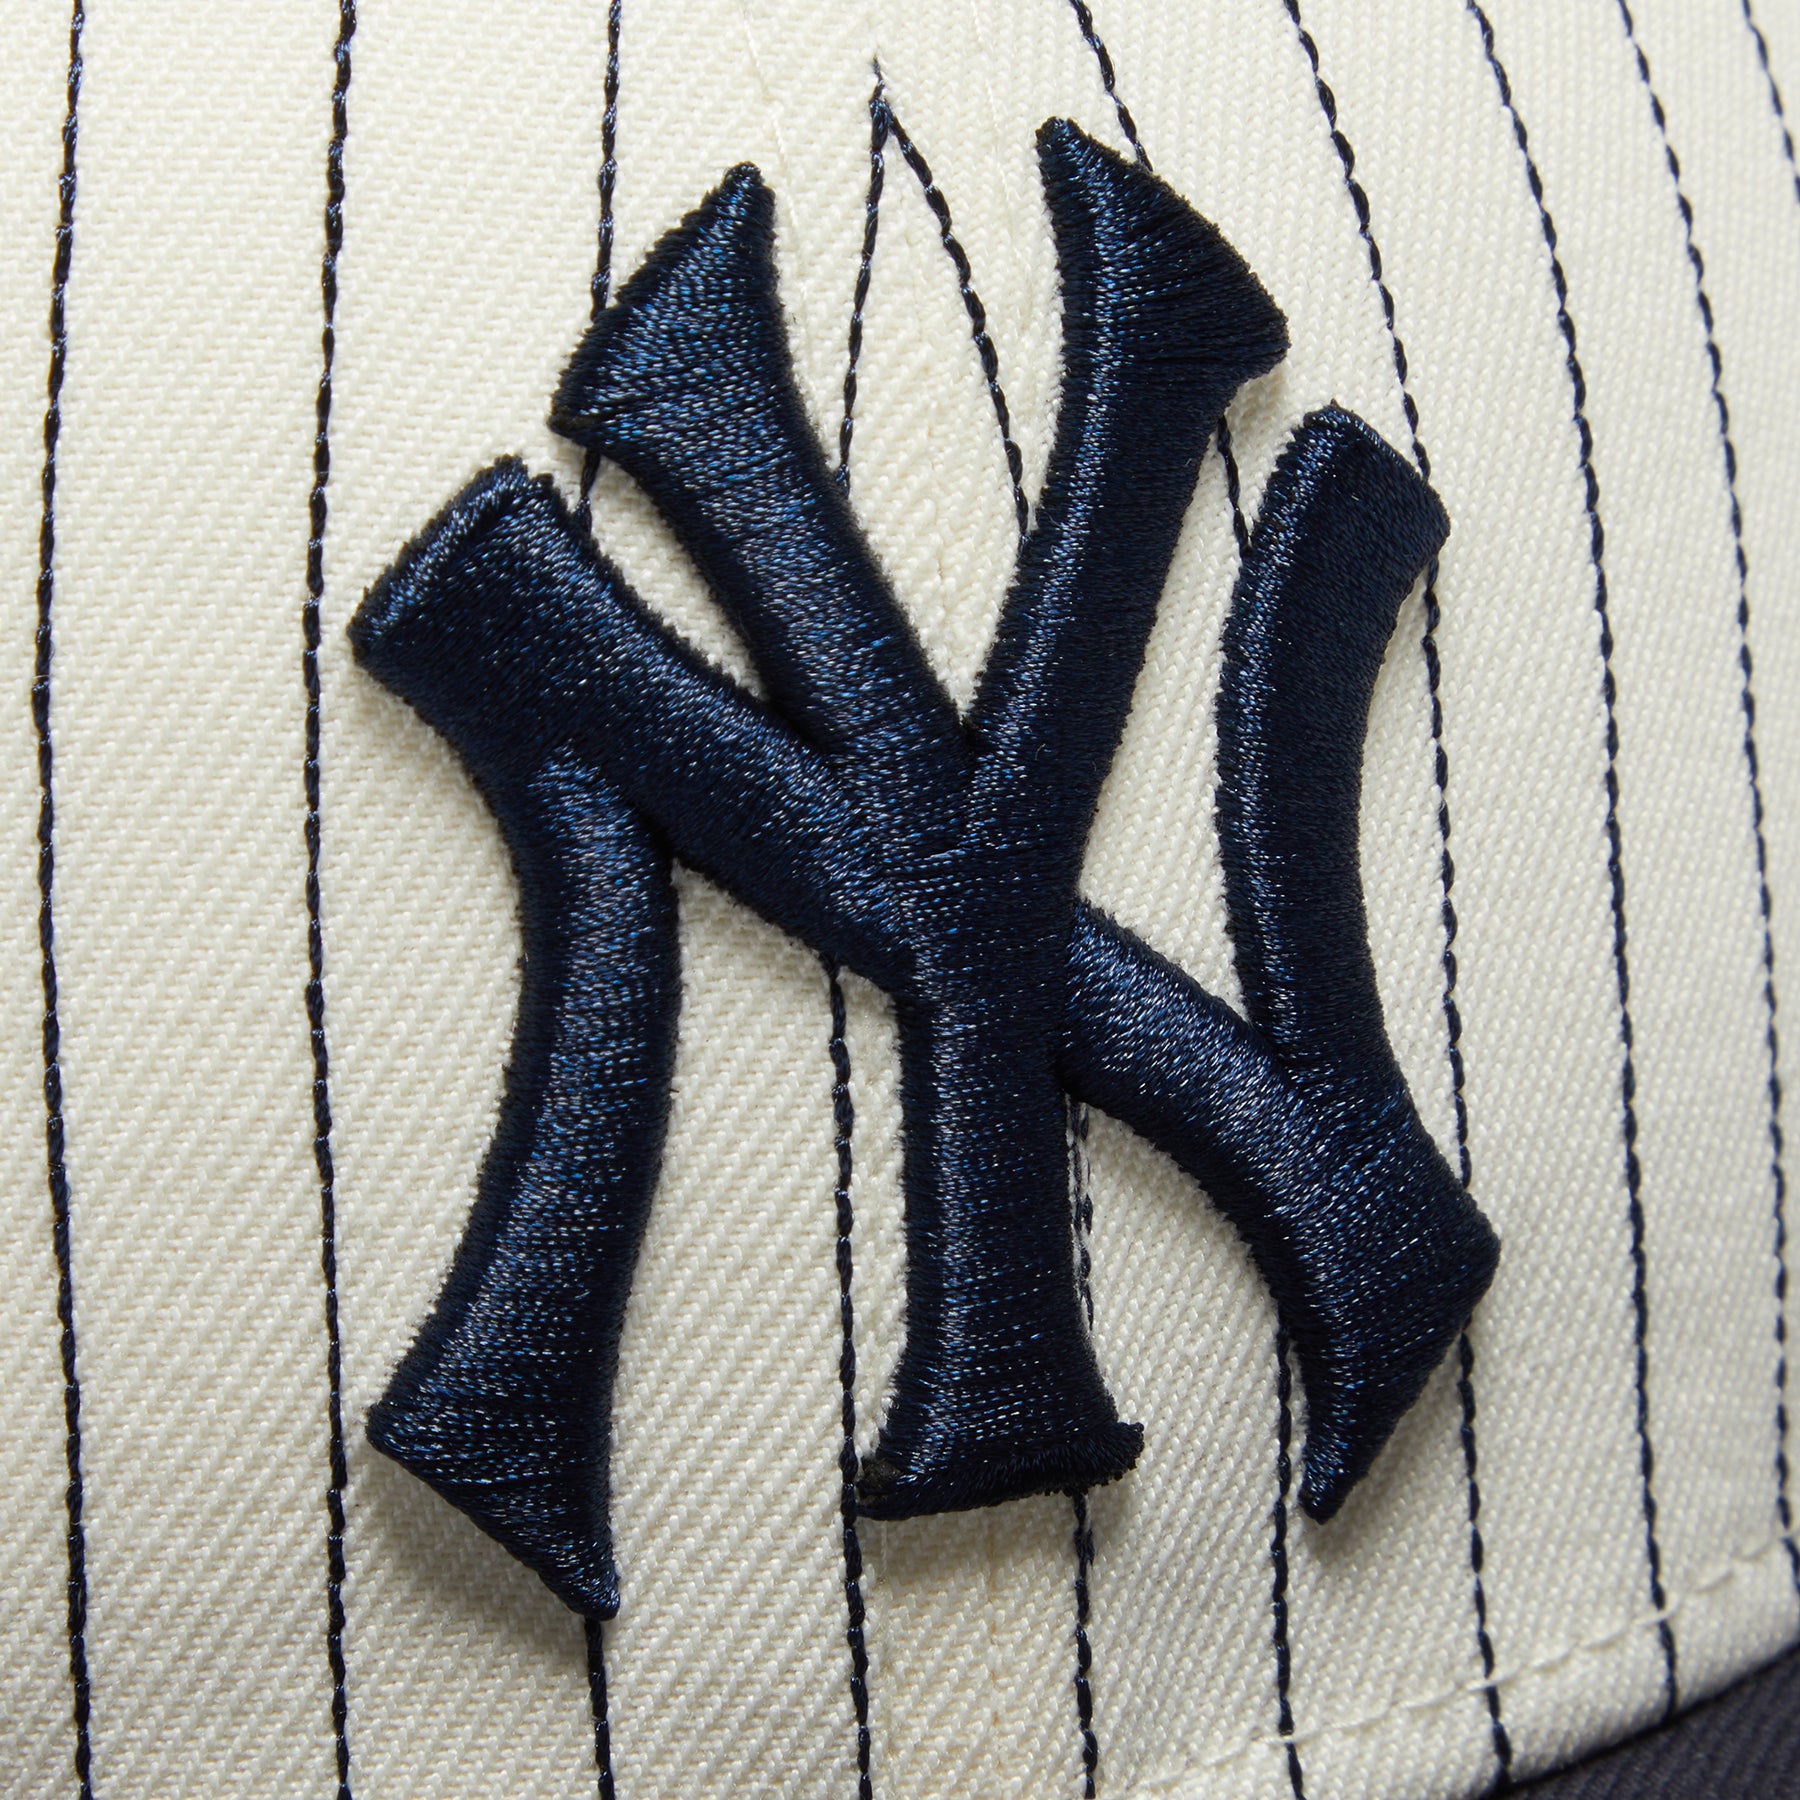 New Era Flat Brim 59FIFTY Retro Script New York Yankees MLB Beige and Navy  Blue Fitted Cap